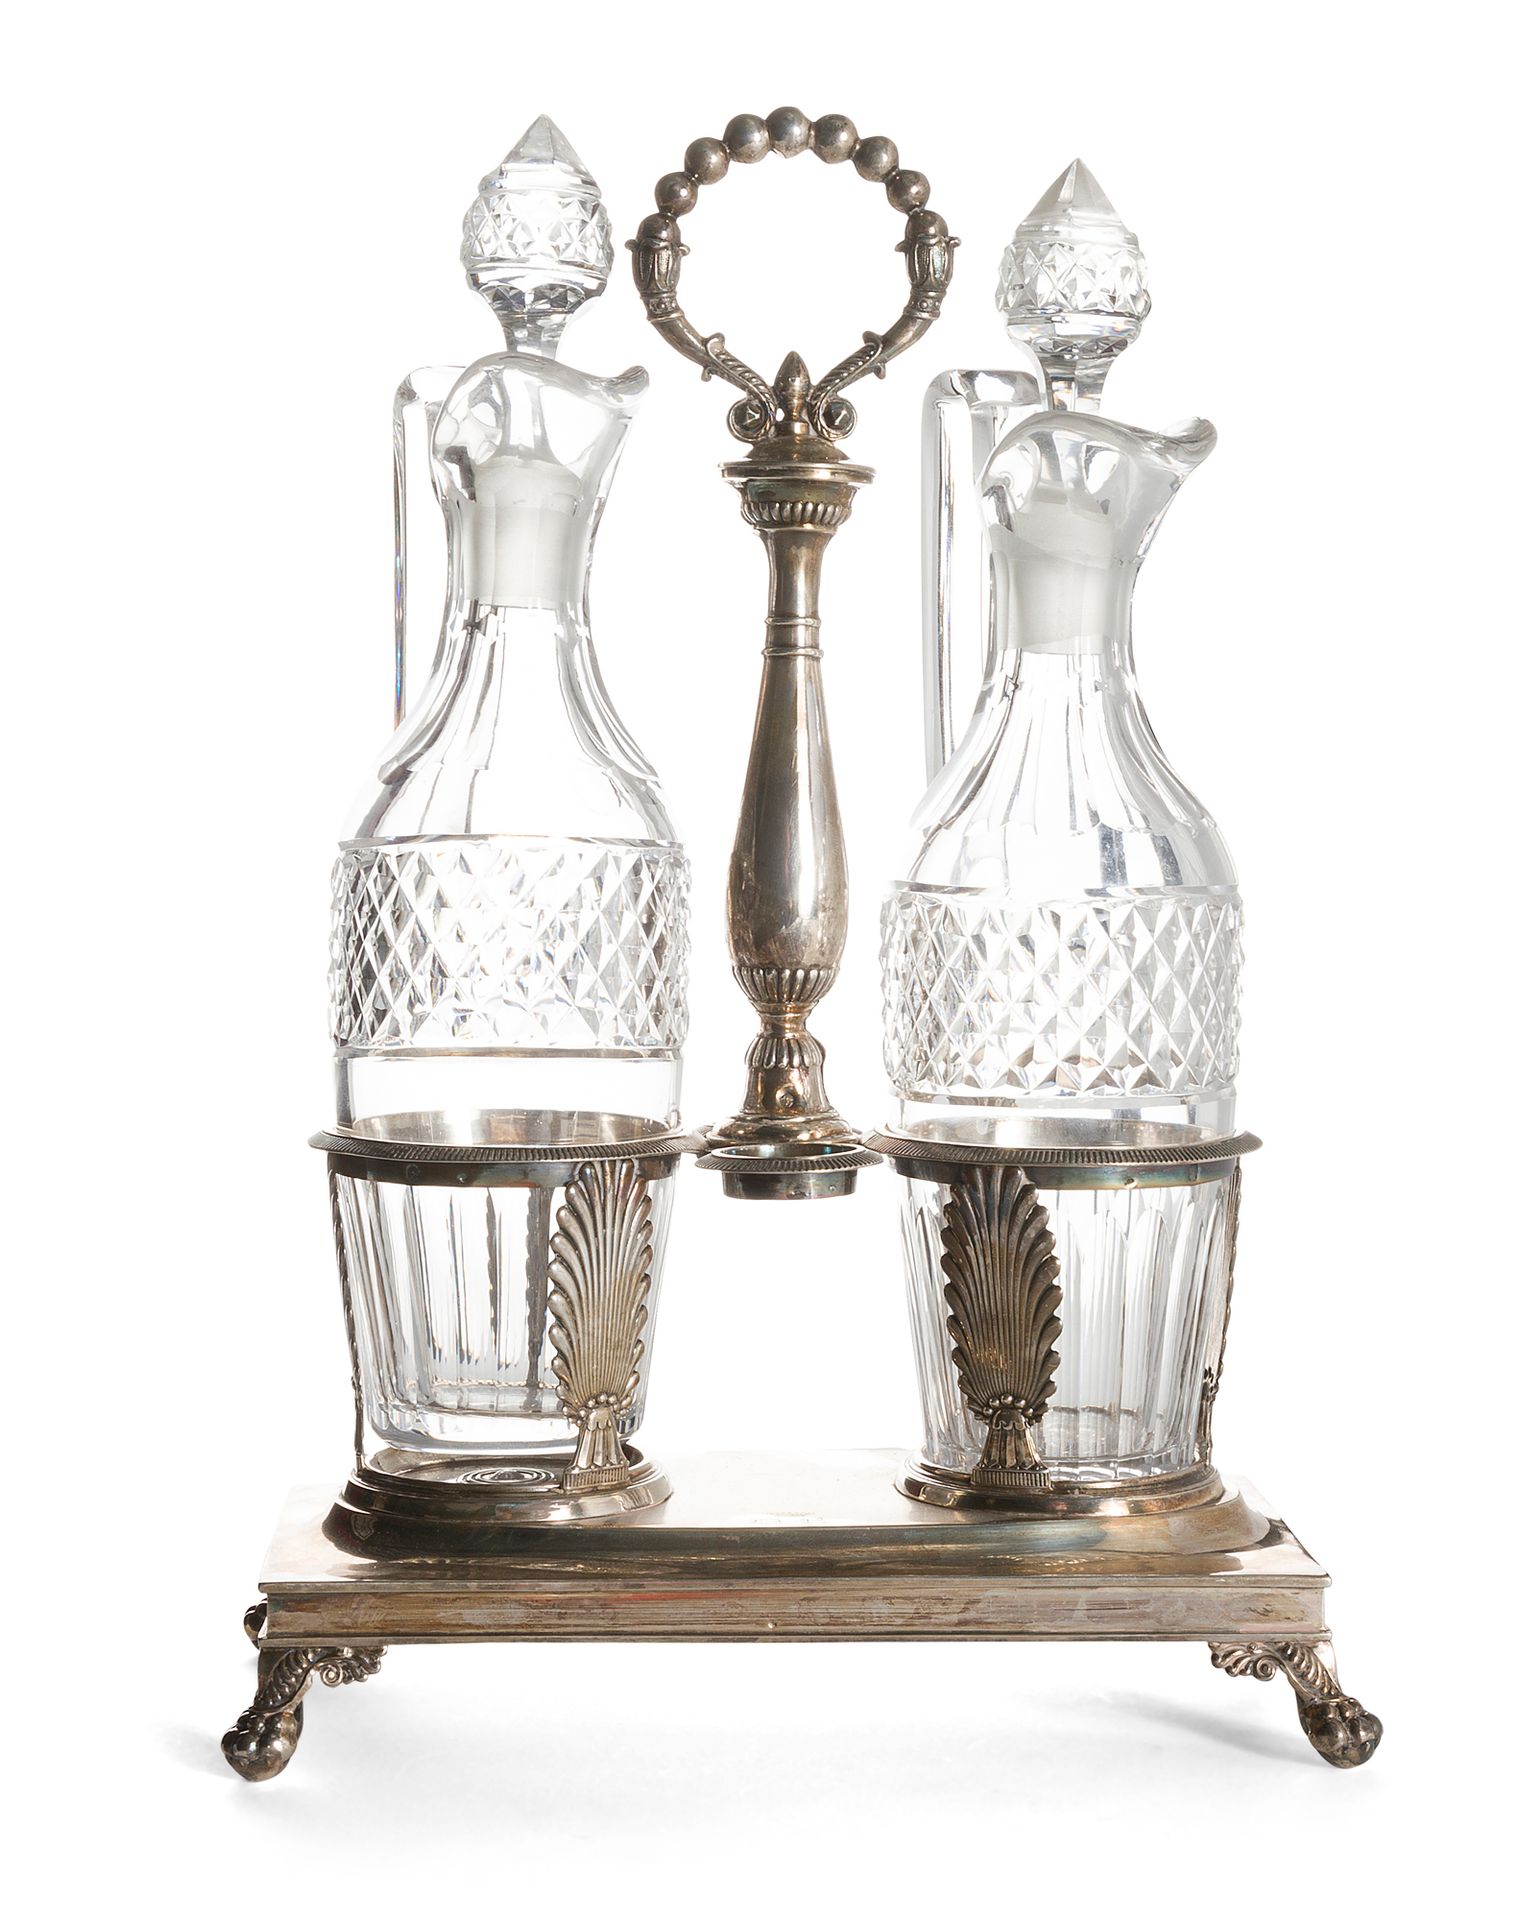 Null 一个银质油壶（Vieillard），上面装饰着棕榈叶和小圆点。长方形的底座上有爪子脚。顶端为伯爵皇冠的DR字母缩写。它支持两个切割有钻石点楣的水晶瓶。&hellip;